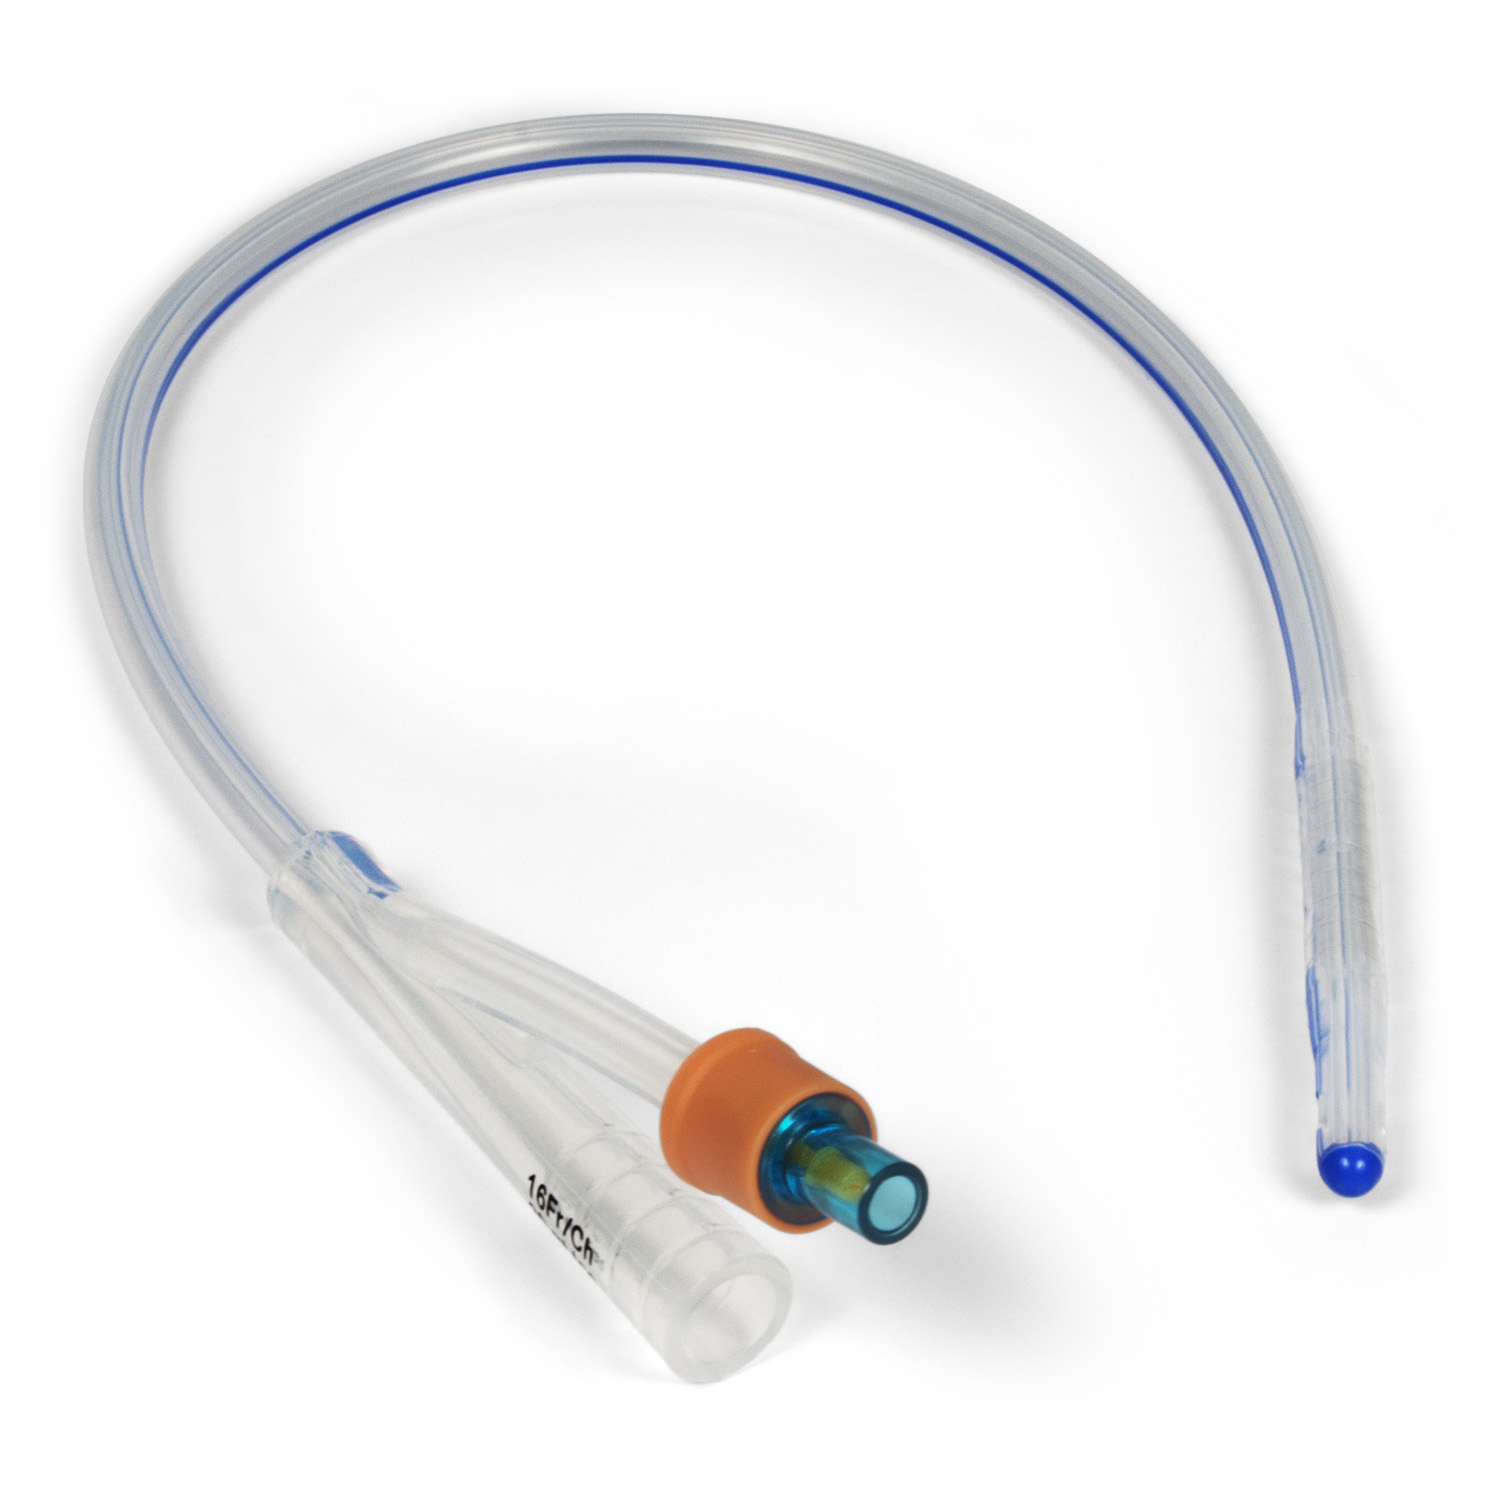 Silicone Foley Catheters 2-way Standard - 18FR / 30cc